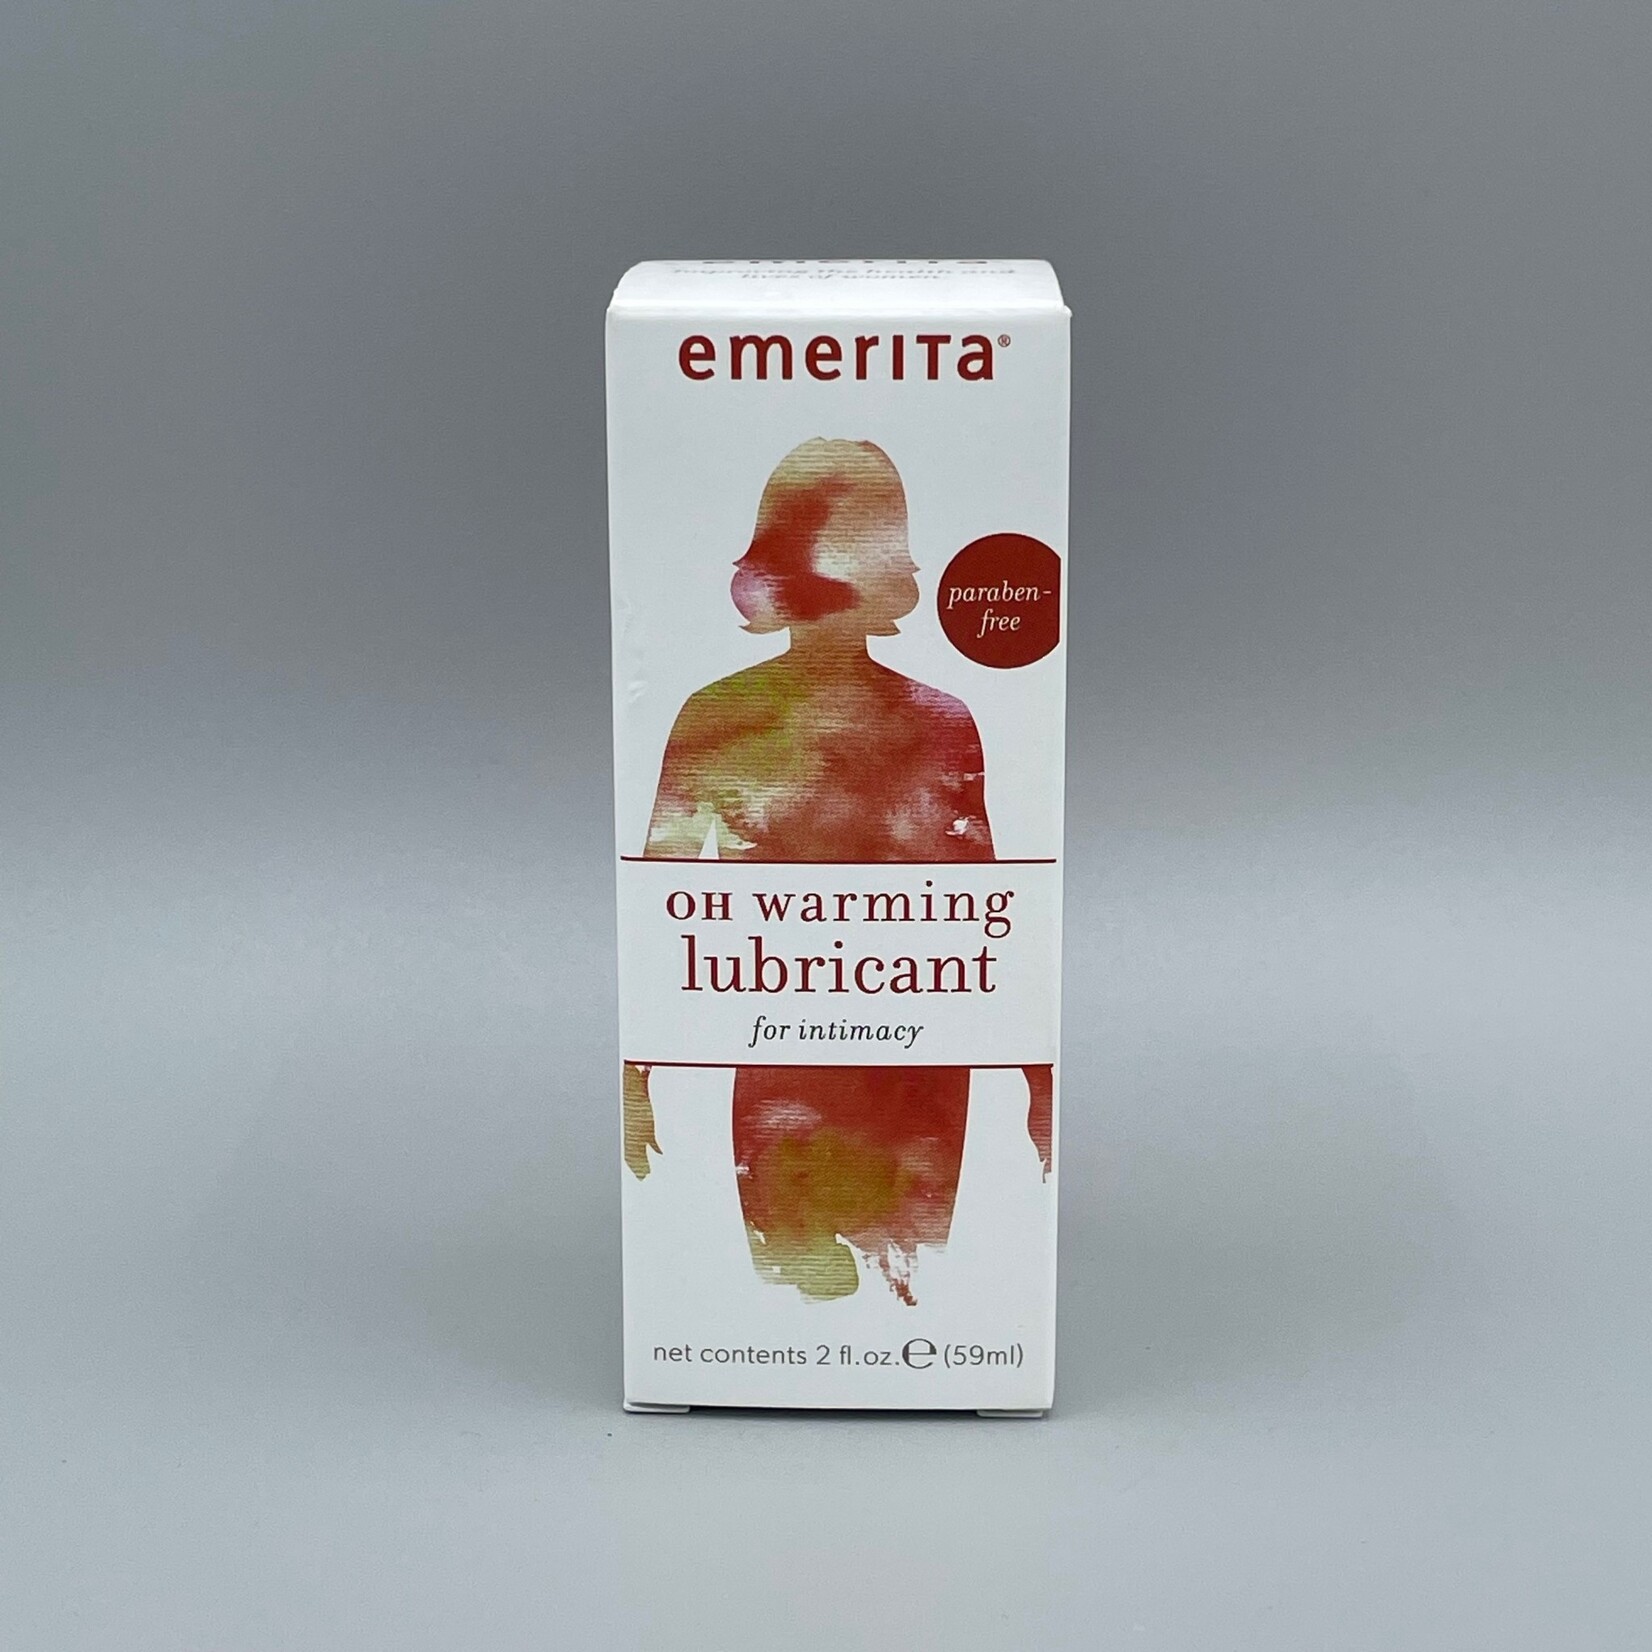 Emerita Pro-Gest Balancing Cream